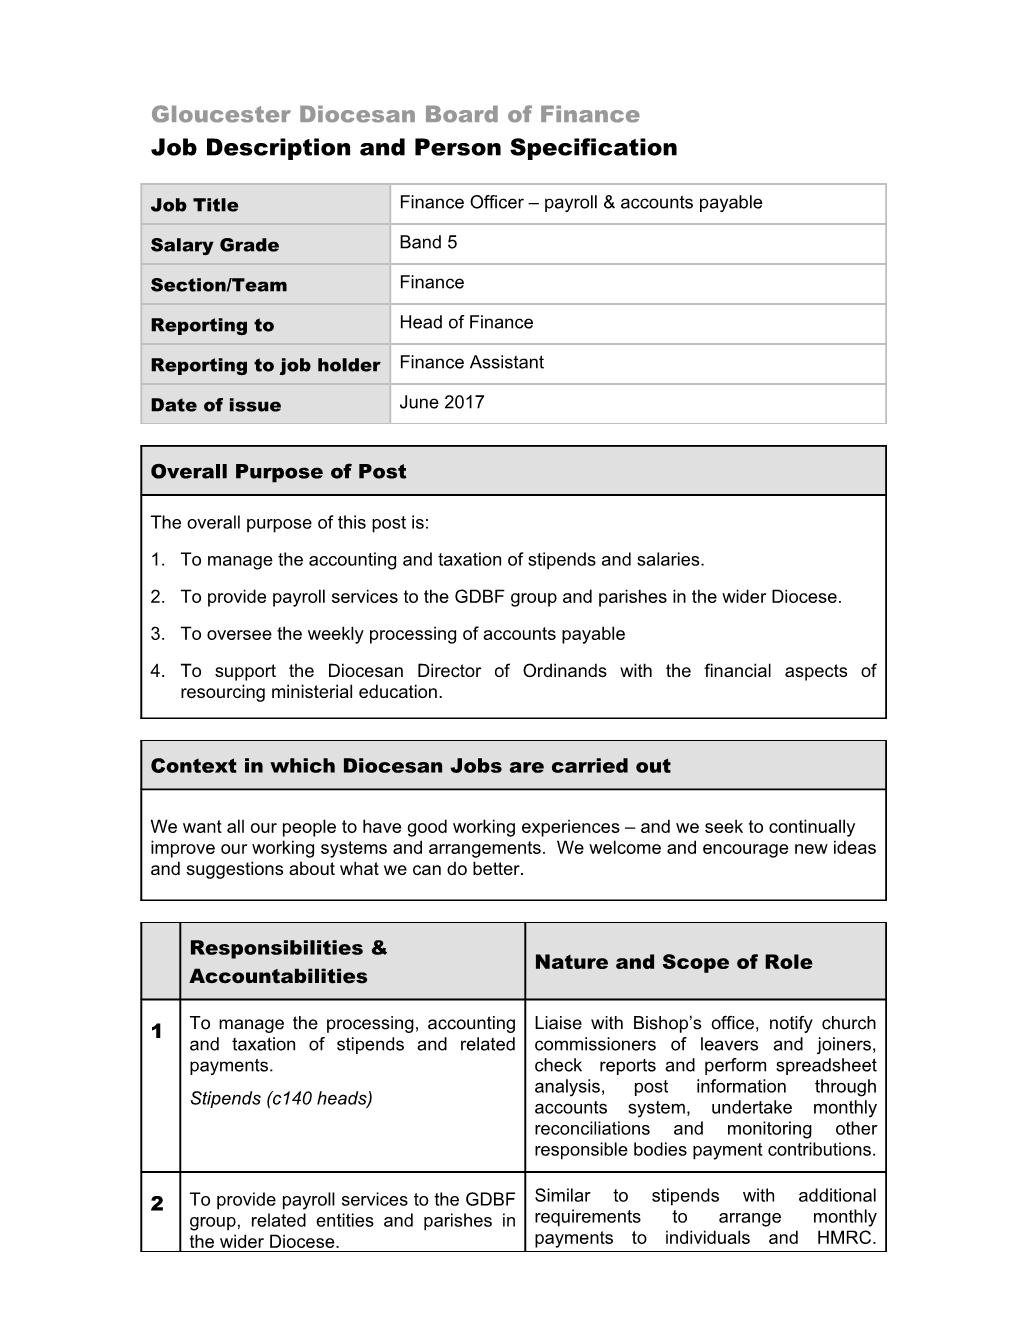 Attachment 2 Job Description and Person Specification Blank Template s1